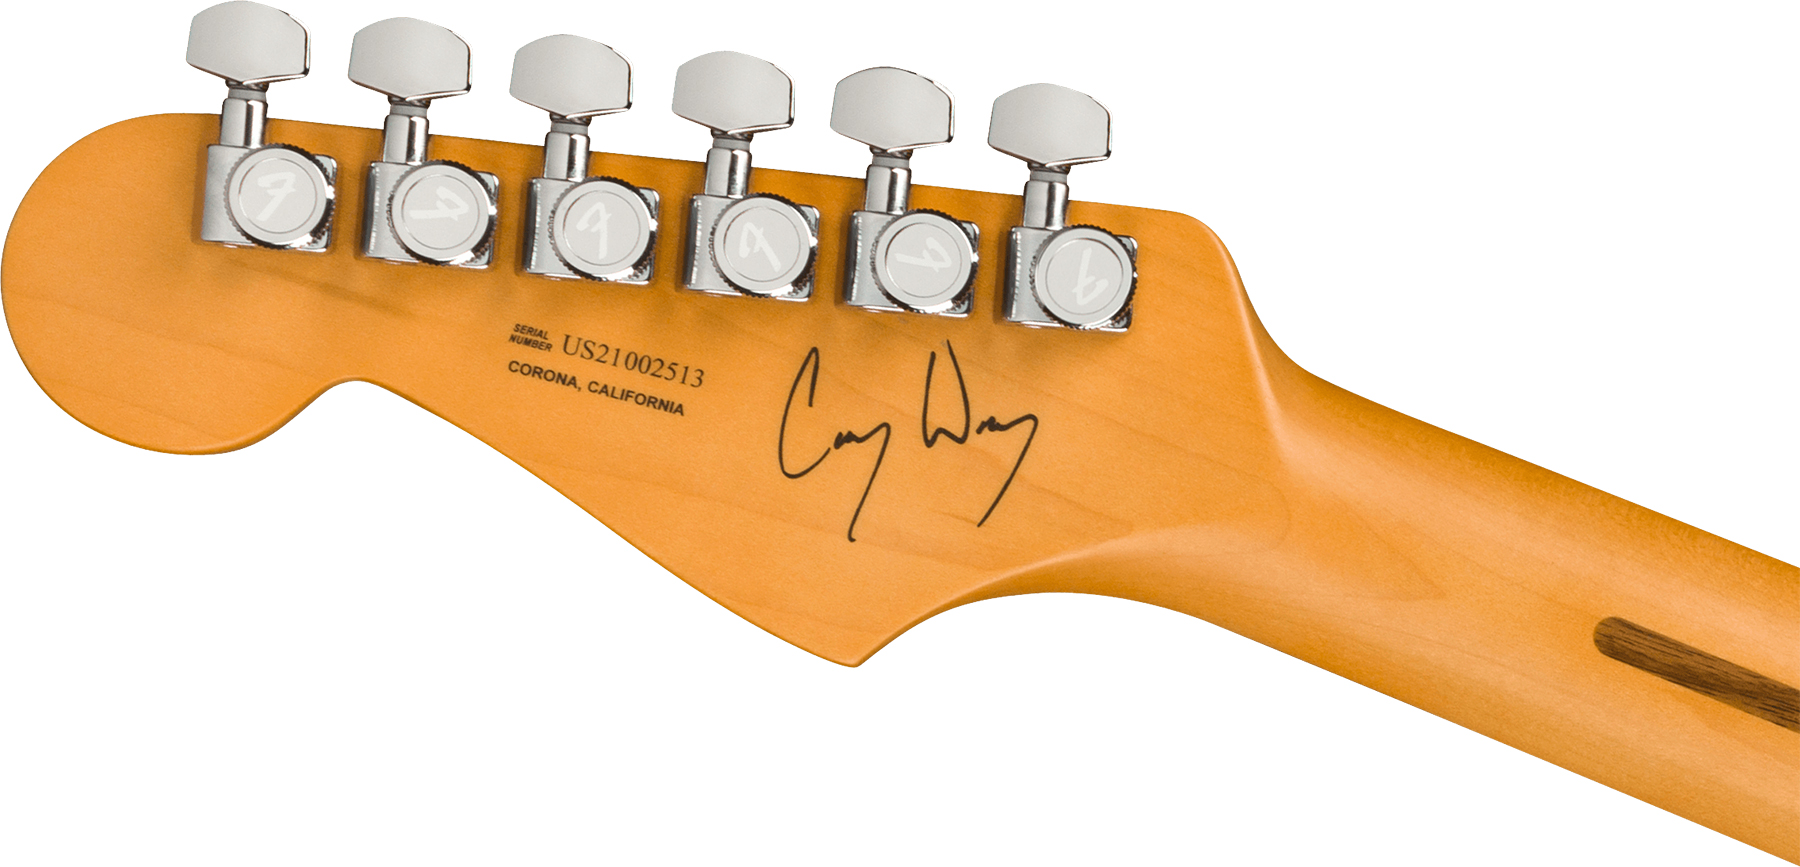 Fender Cory Wong Strat Signature Usa 3s Trem Rw - Sapphire Blue Transparent - Str shape electric guitar - Variation 3